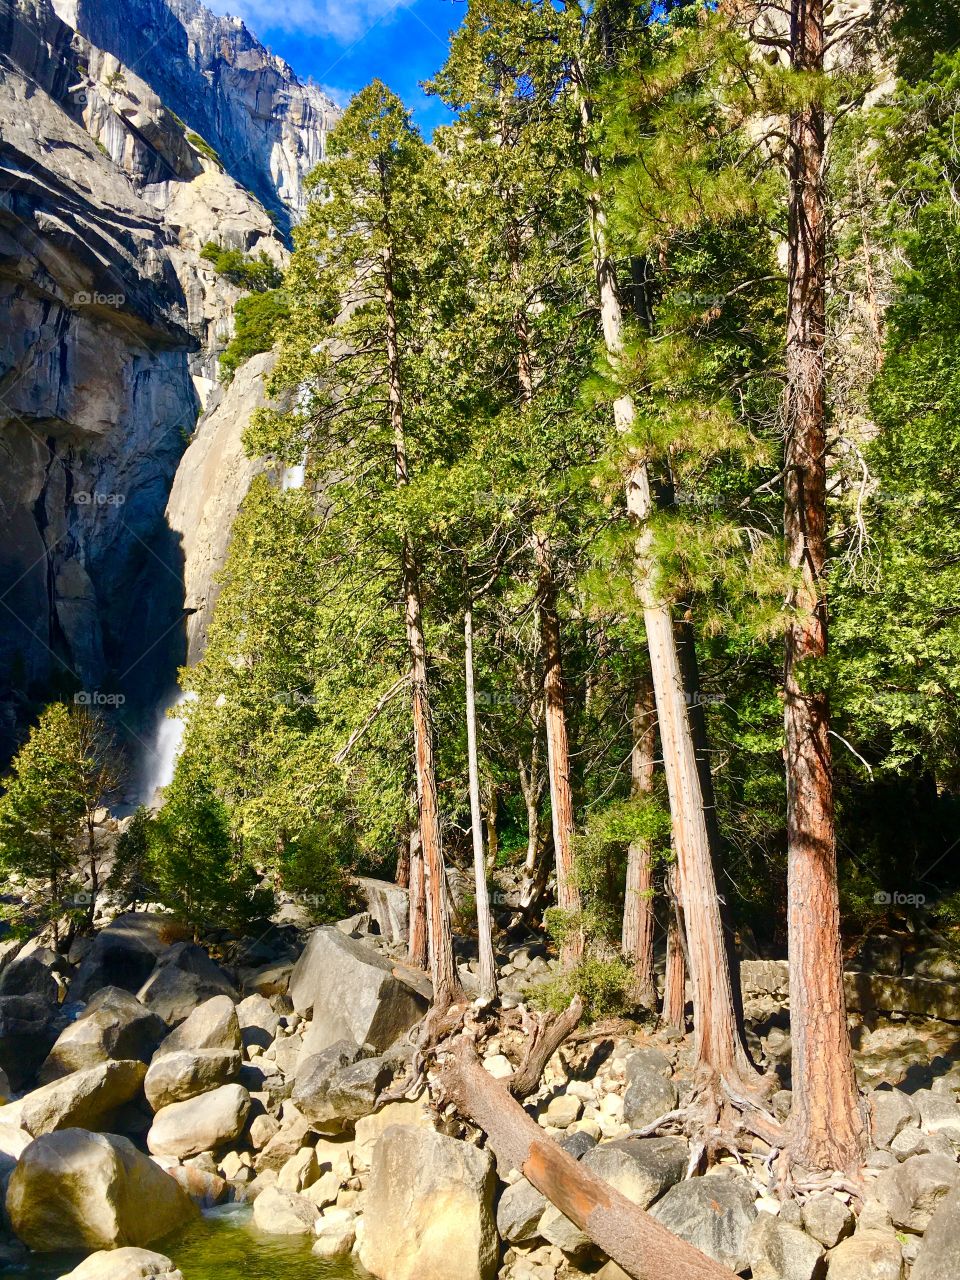 More photos of Yosemite National Park